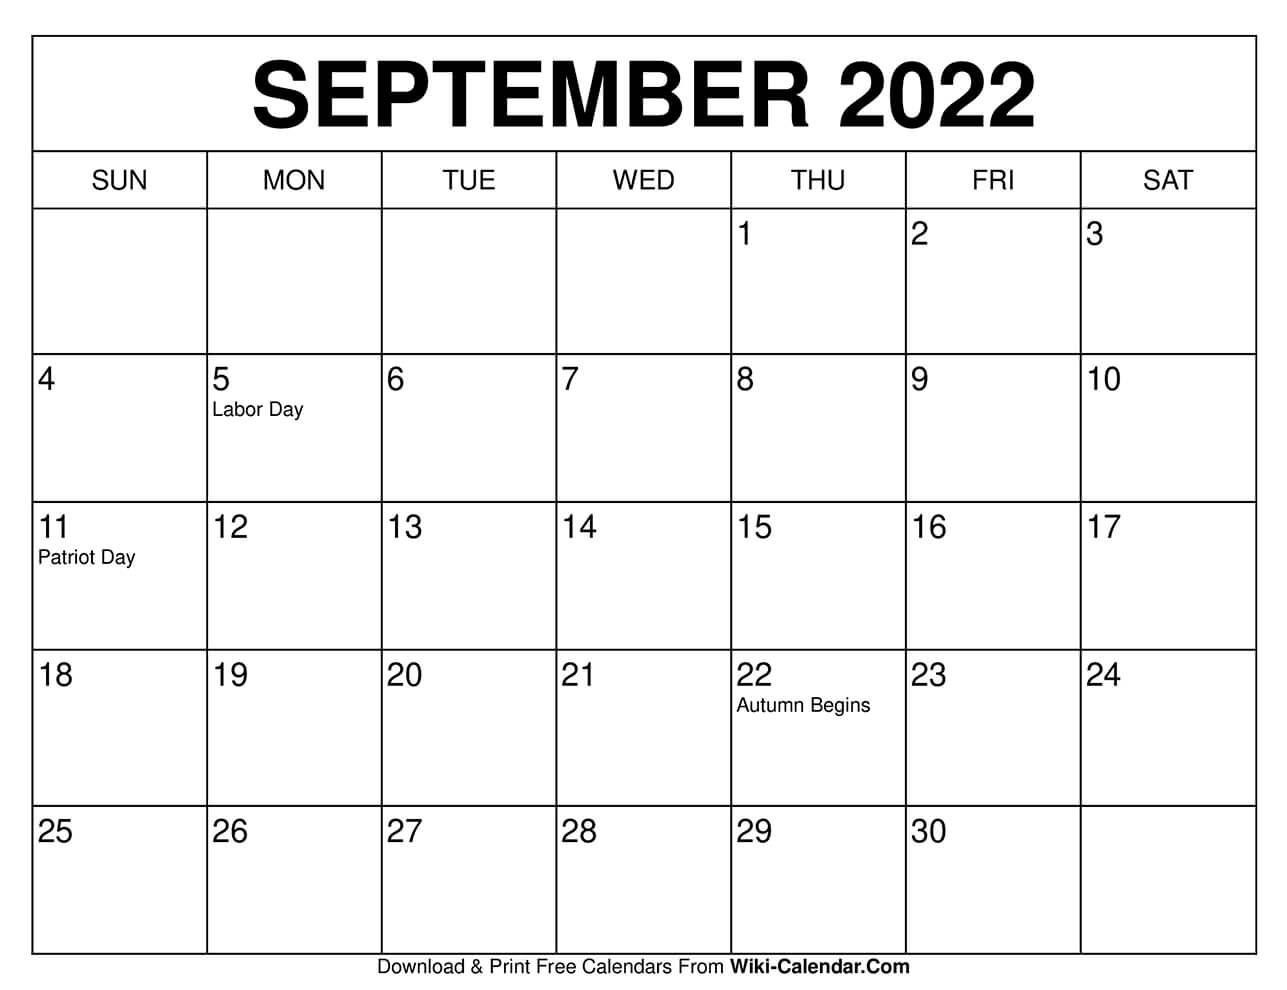 Free Printable September 2022 Calendar Wiki Calendar